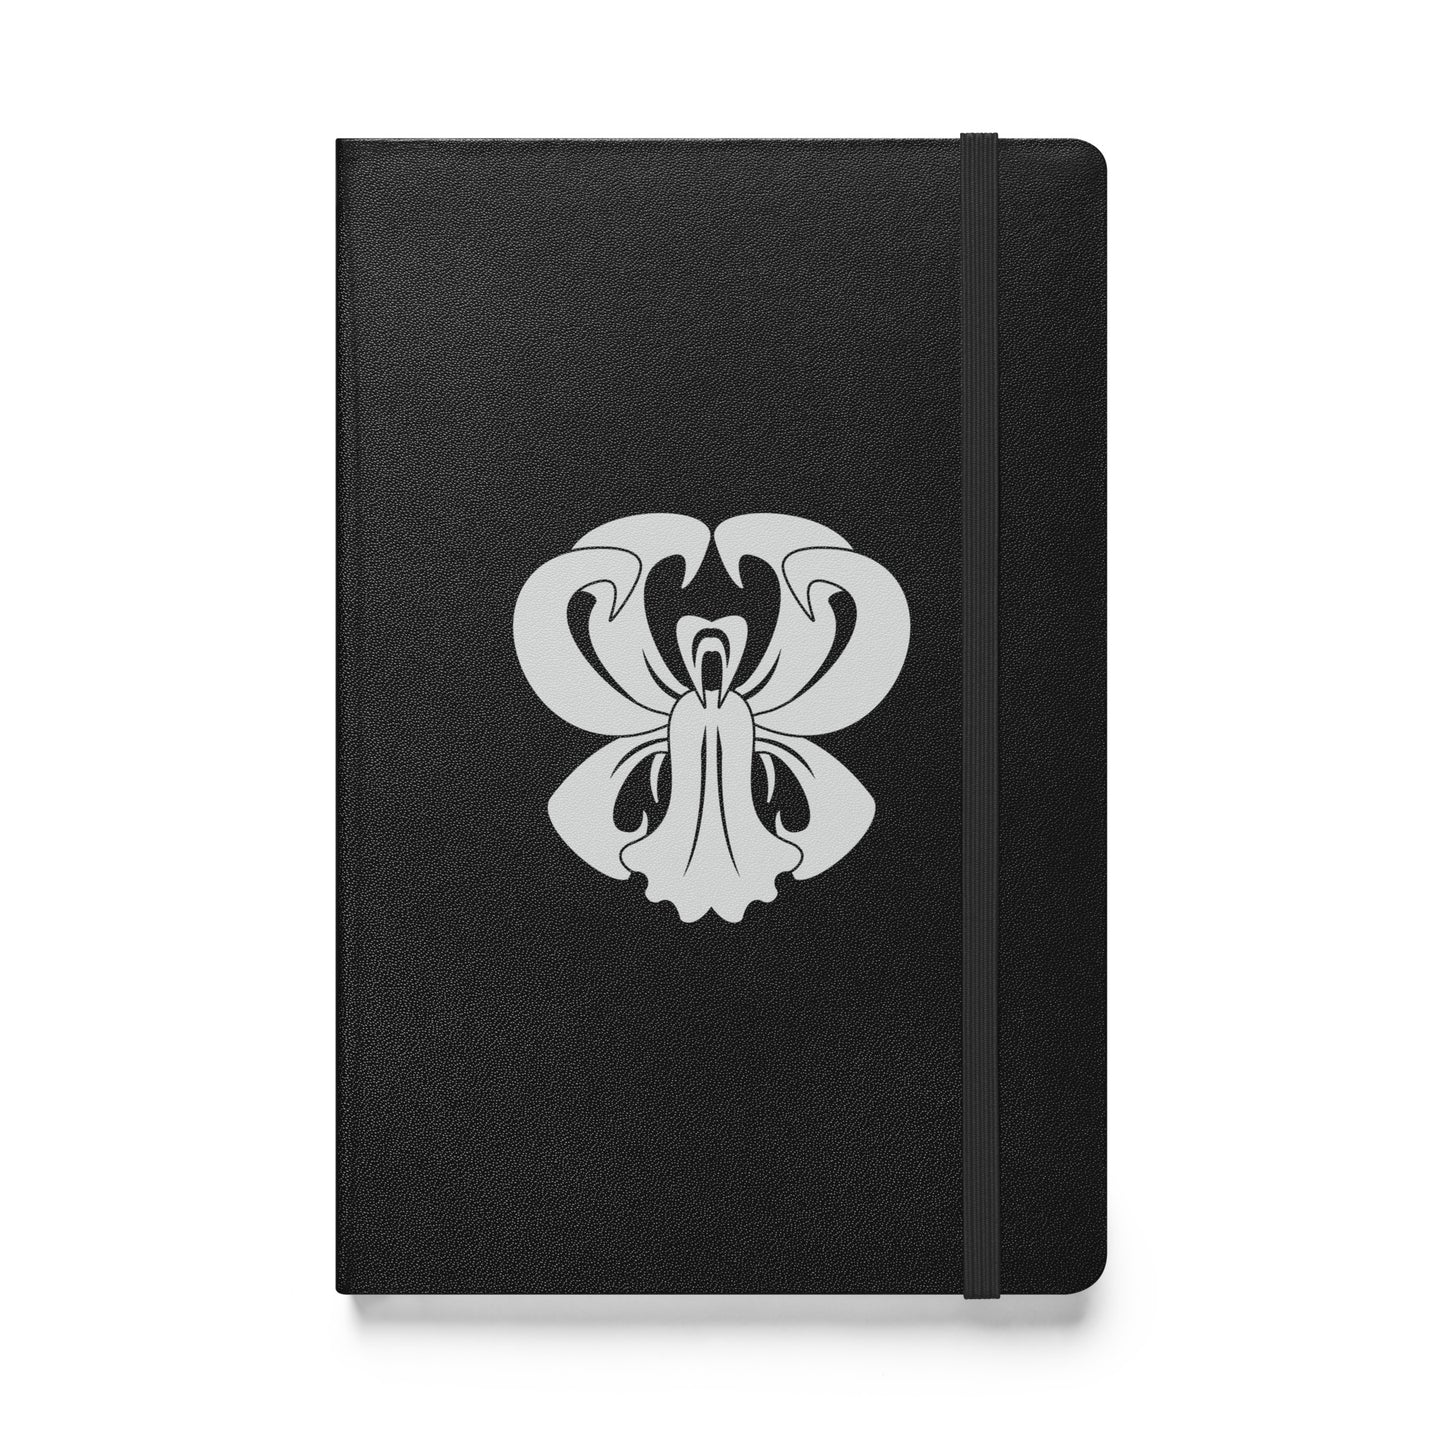 Iris hardcover bound notebook